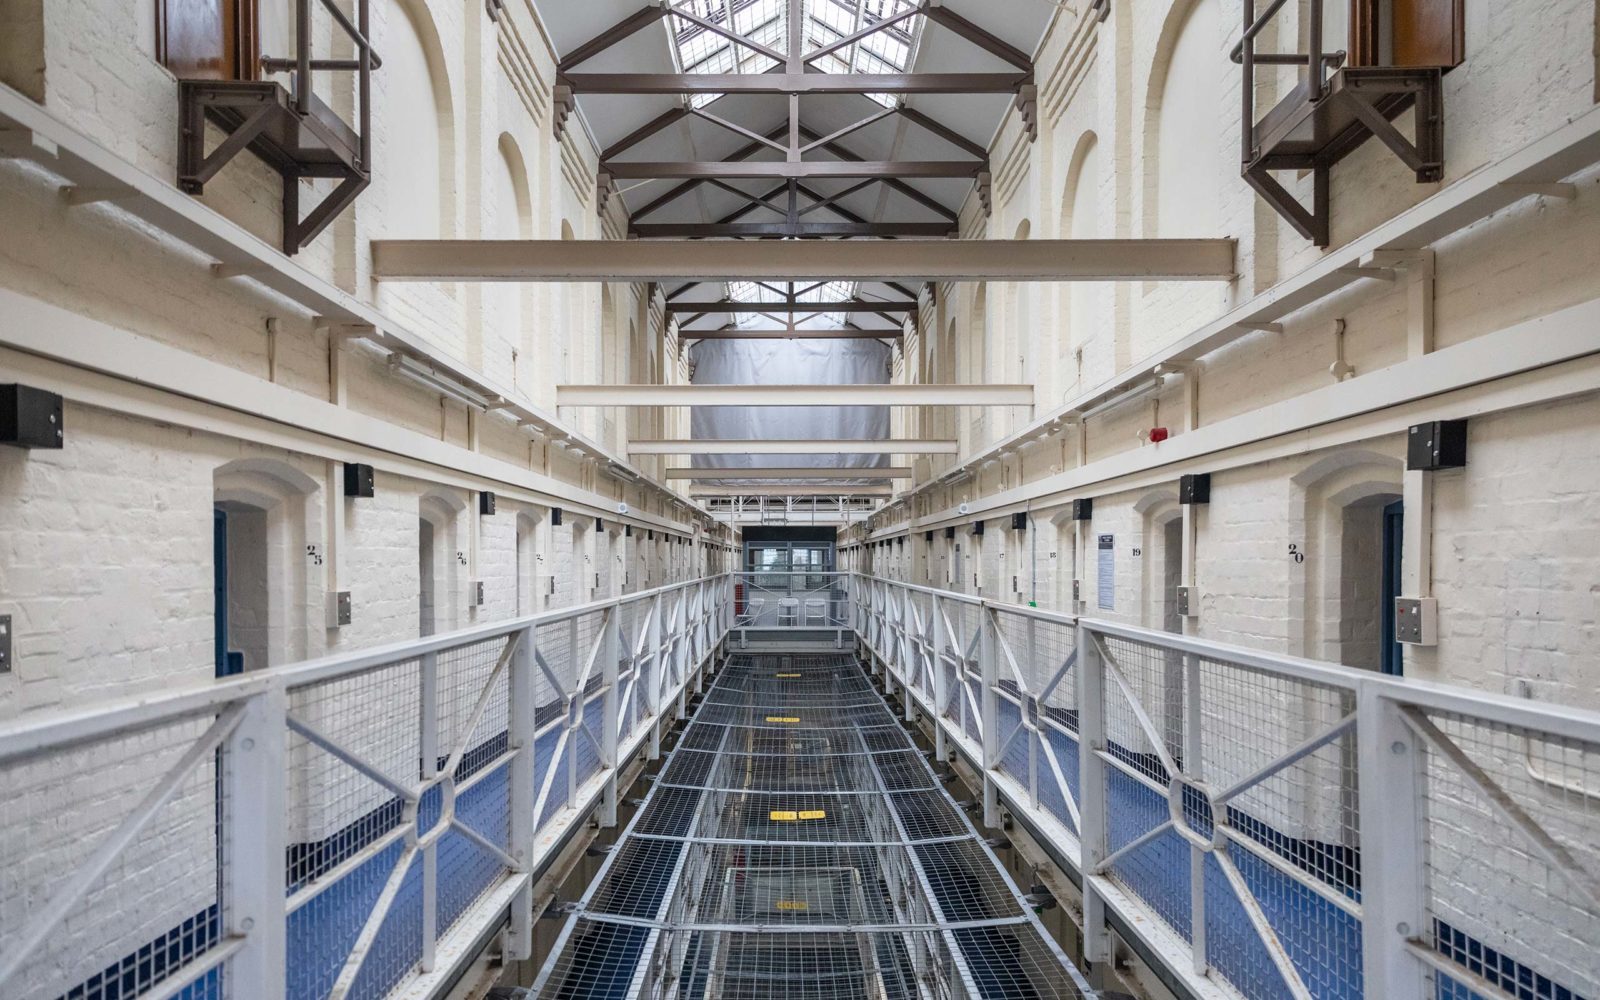 University Trips to Shrewsbury Prison